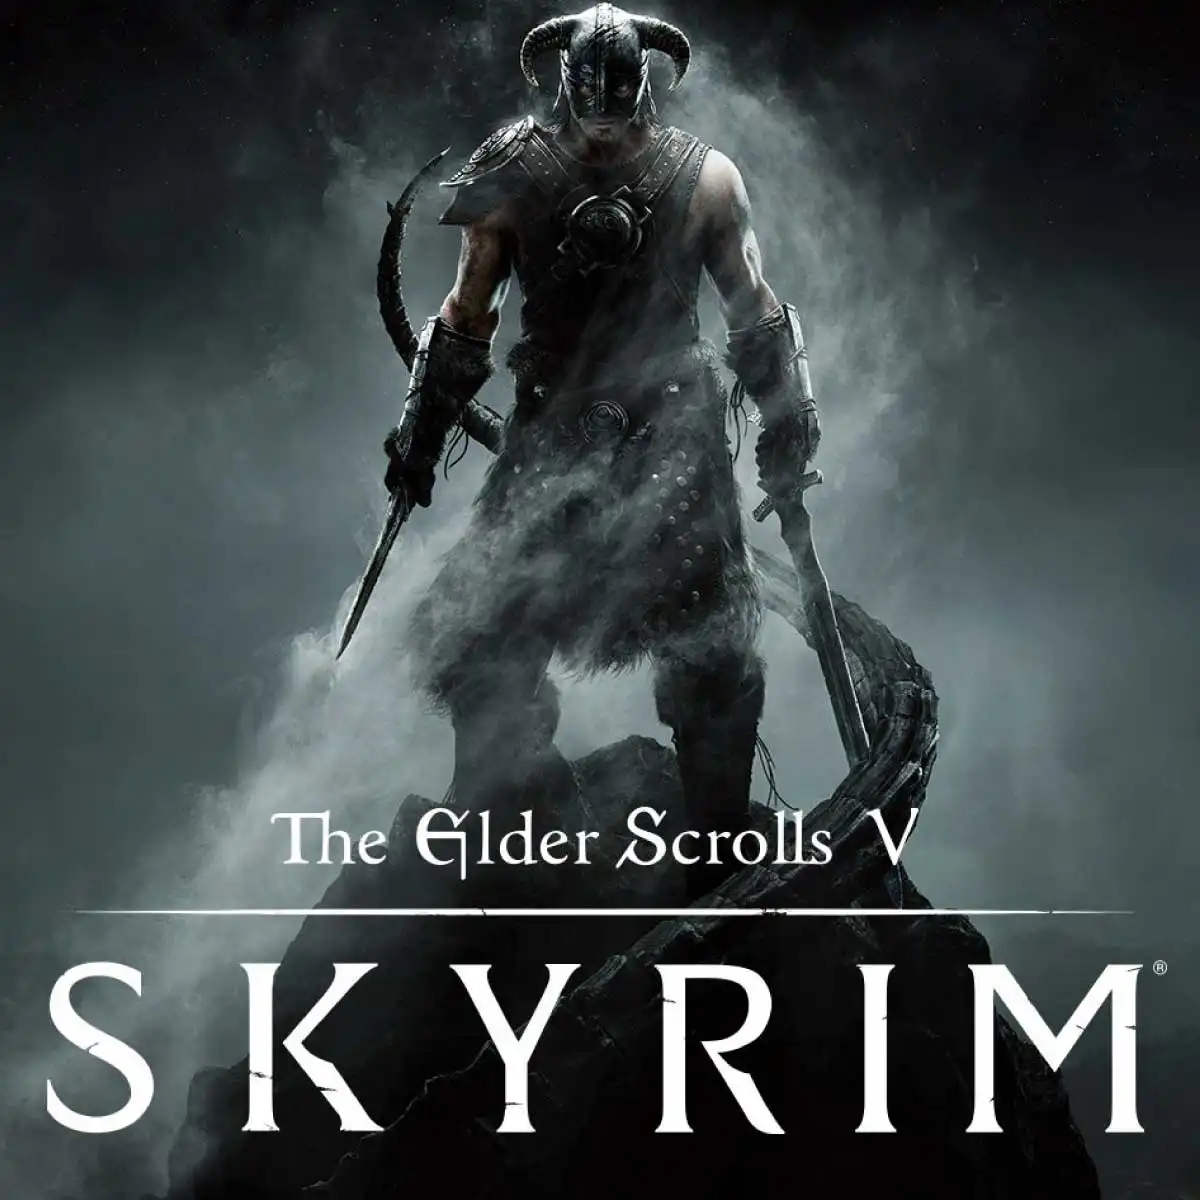 En İyi Rol Yapma Oyunları The Elder Scrolls V: Skyrim